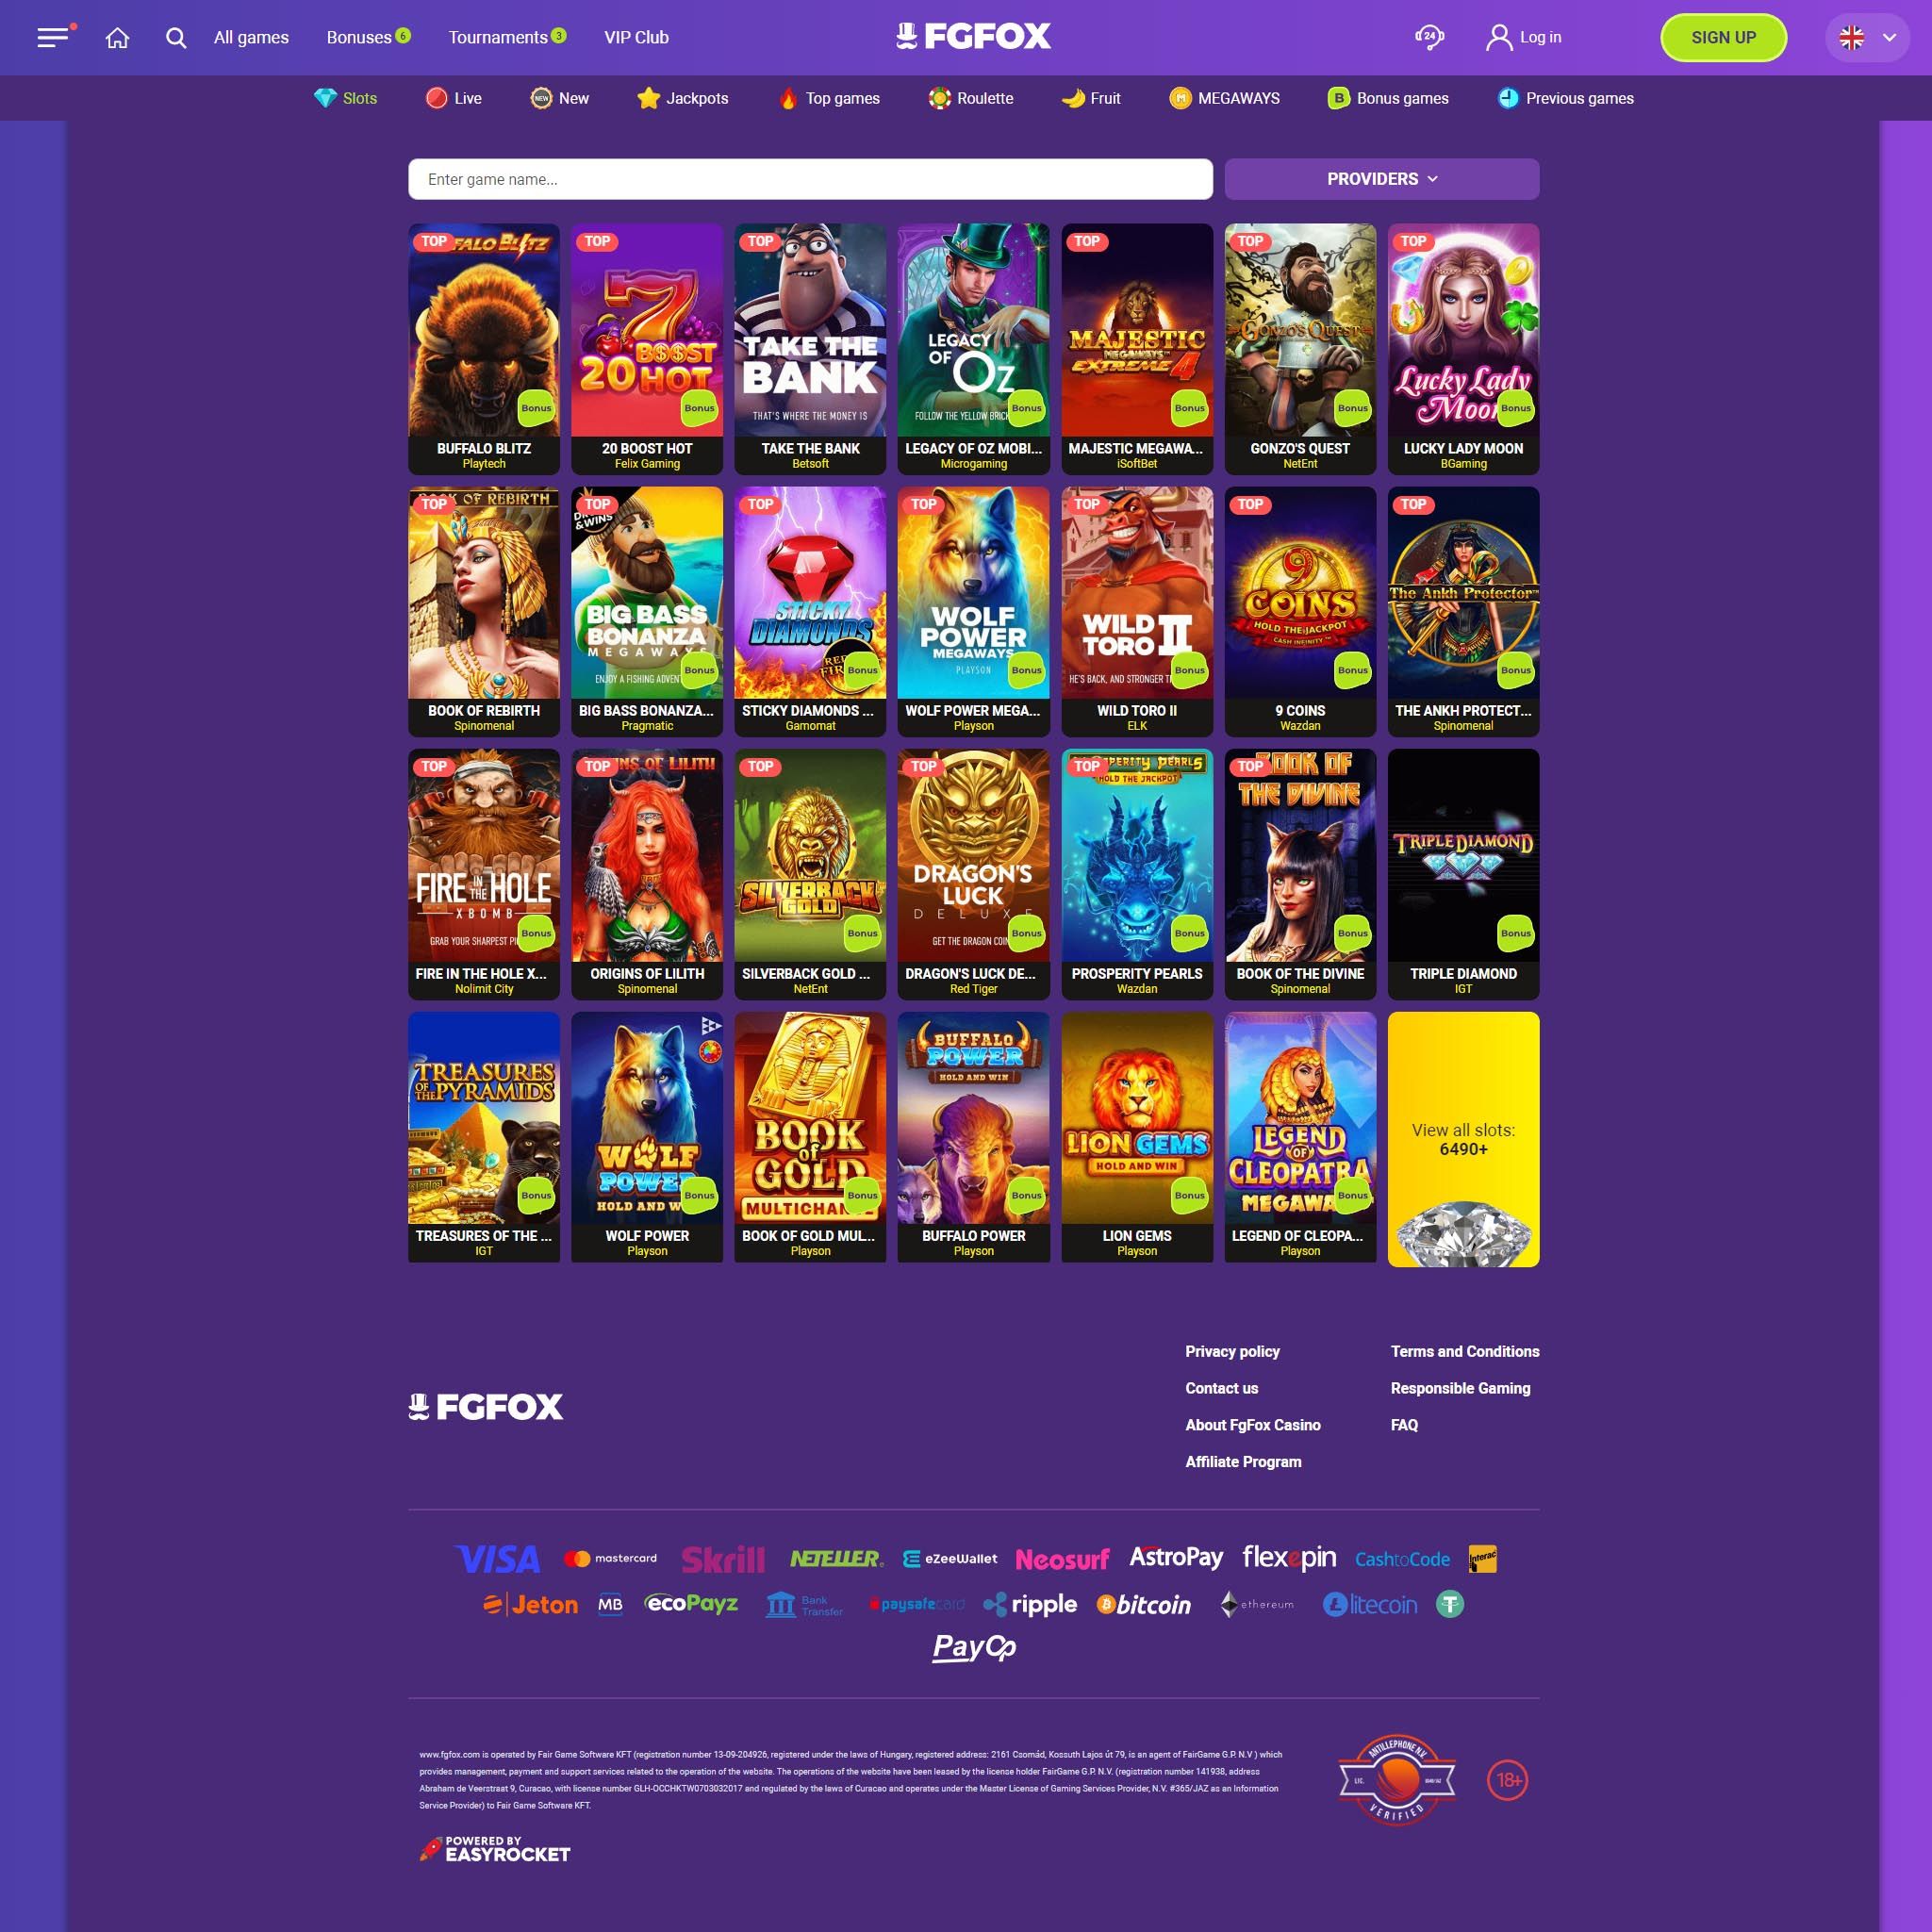 Fgfox Casino full games catalogue